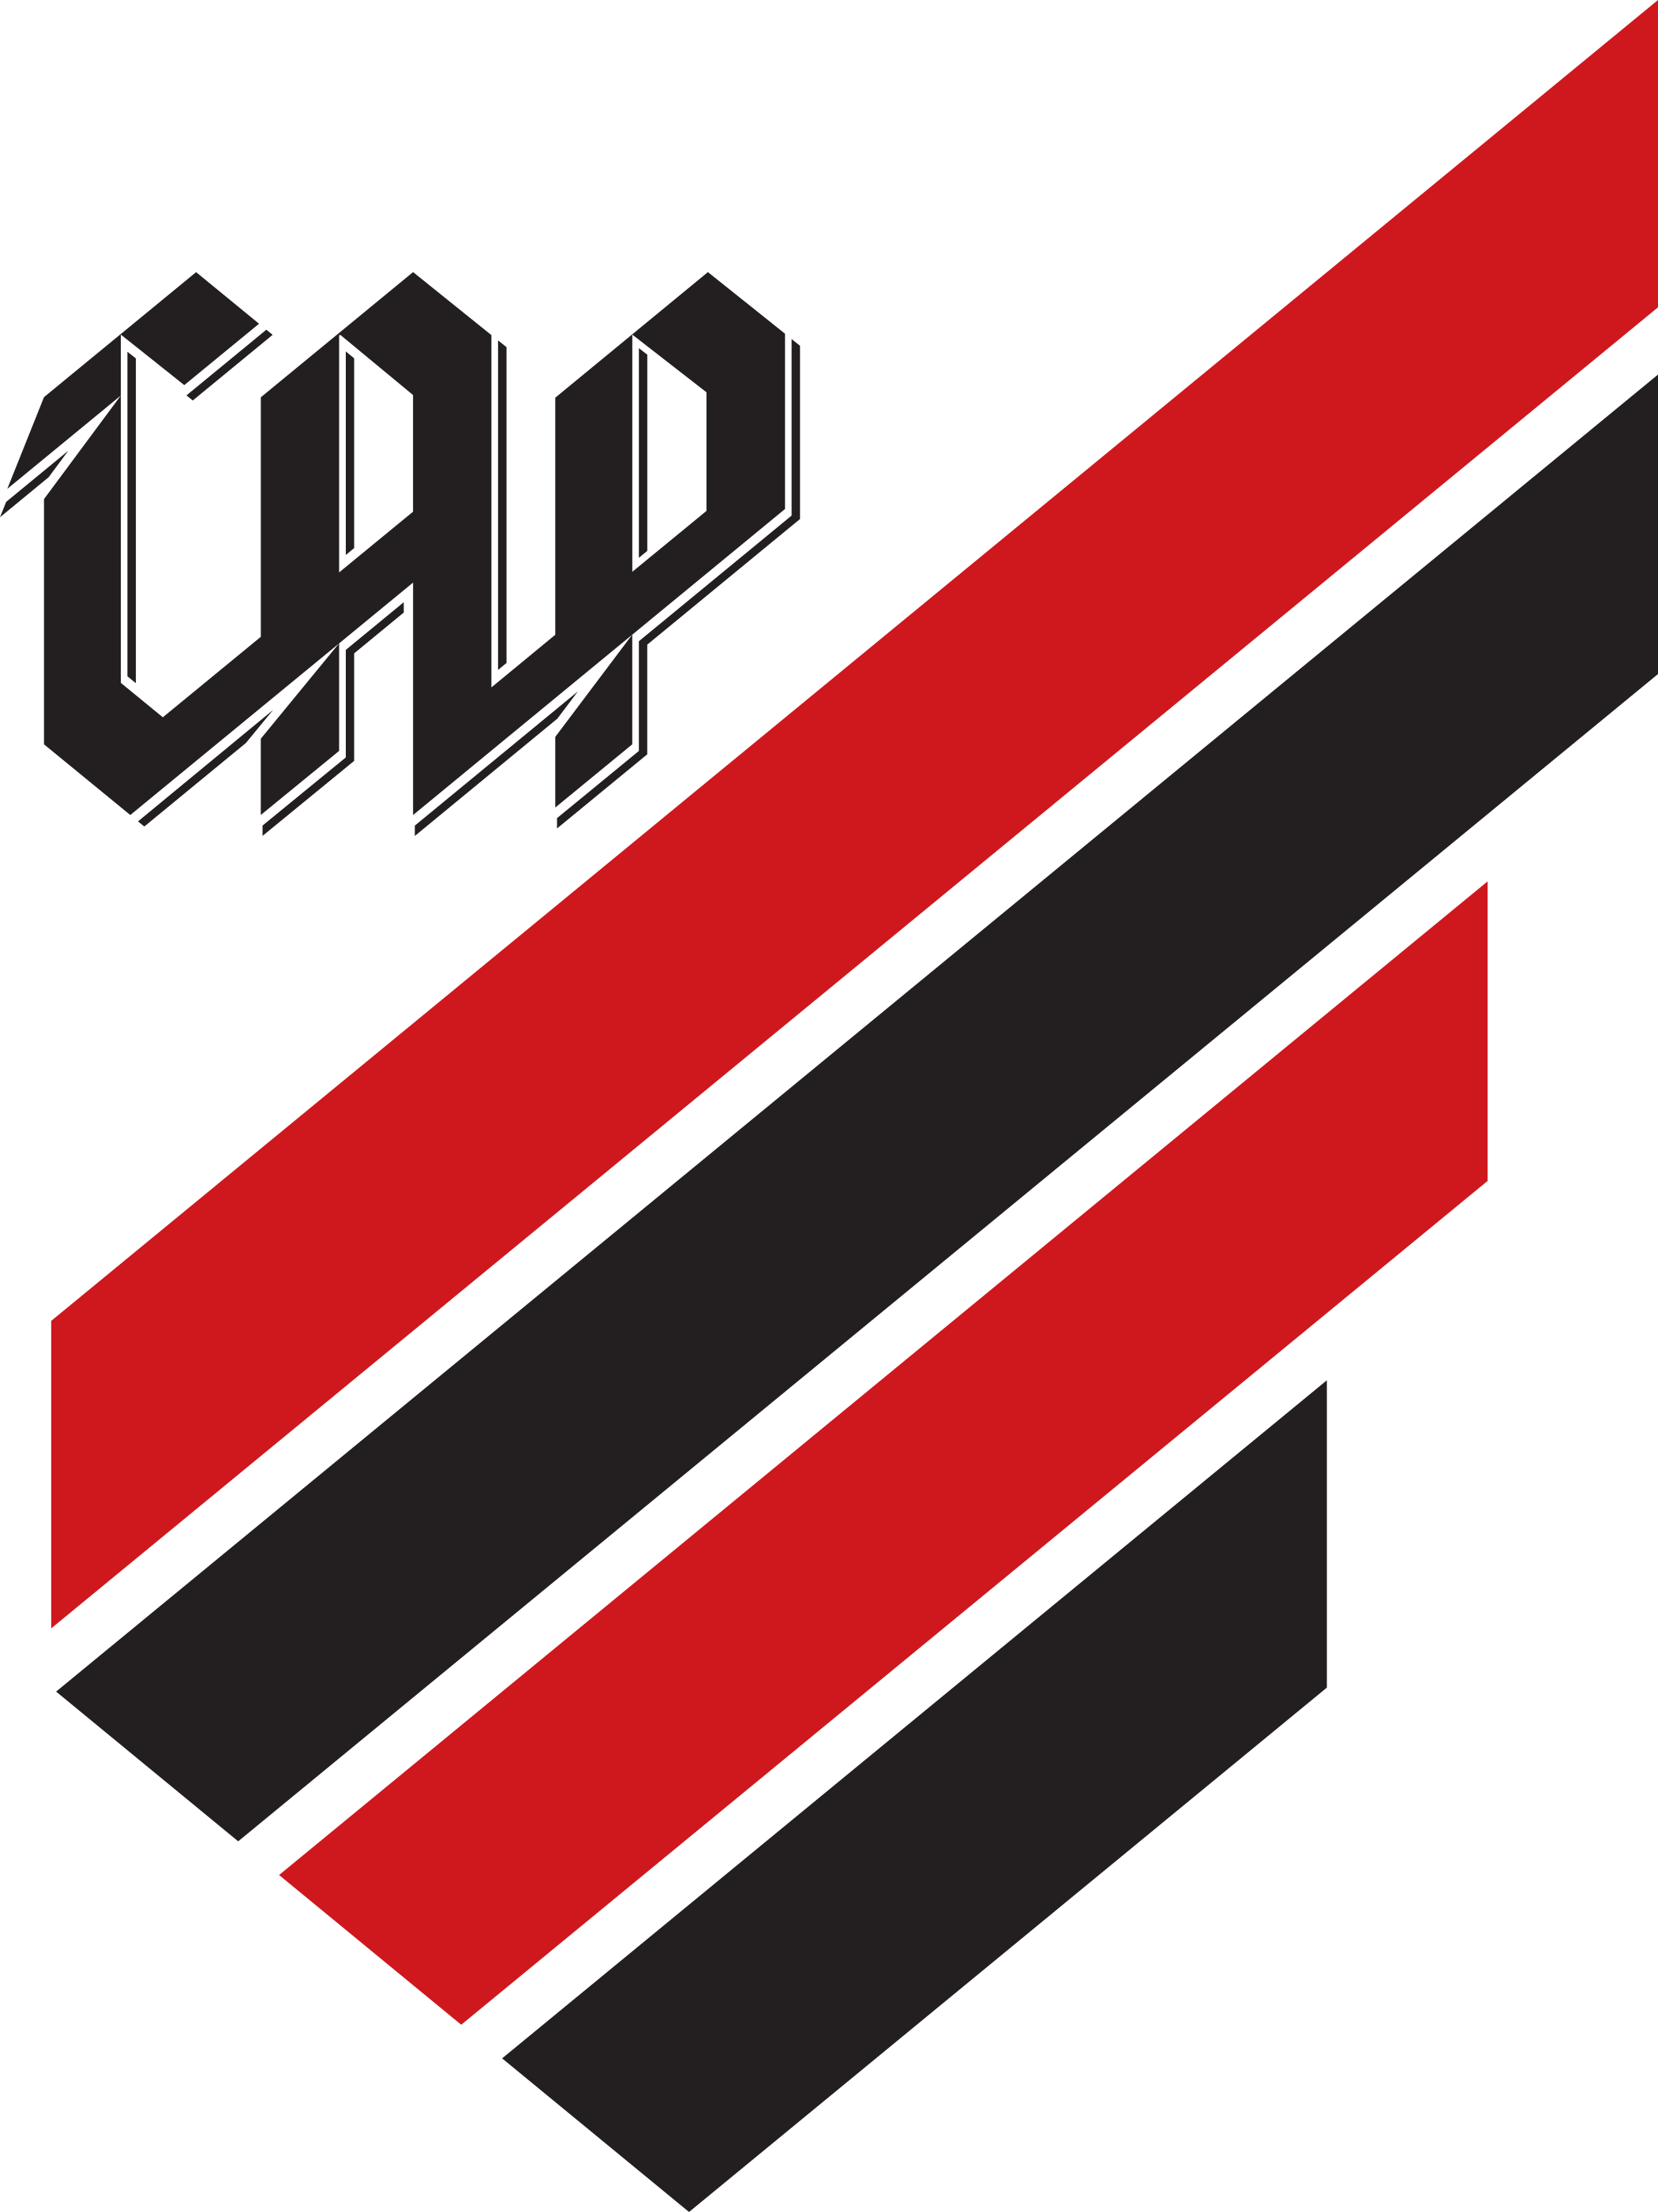 Athletico Paranaense Logo, Escudo Novo.